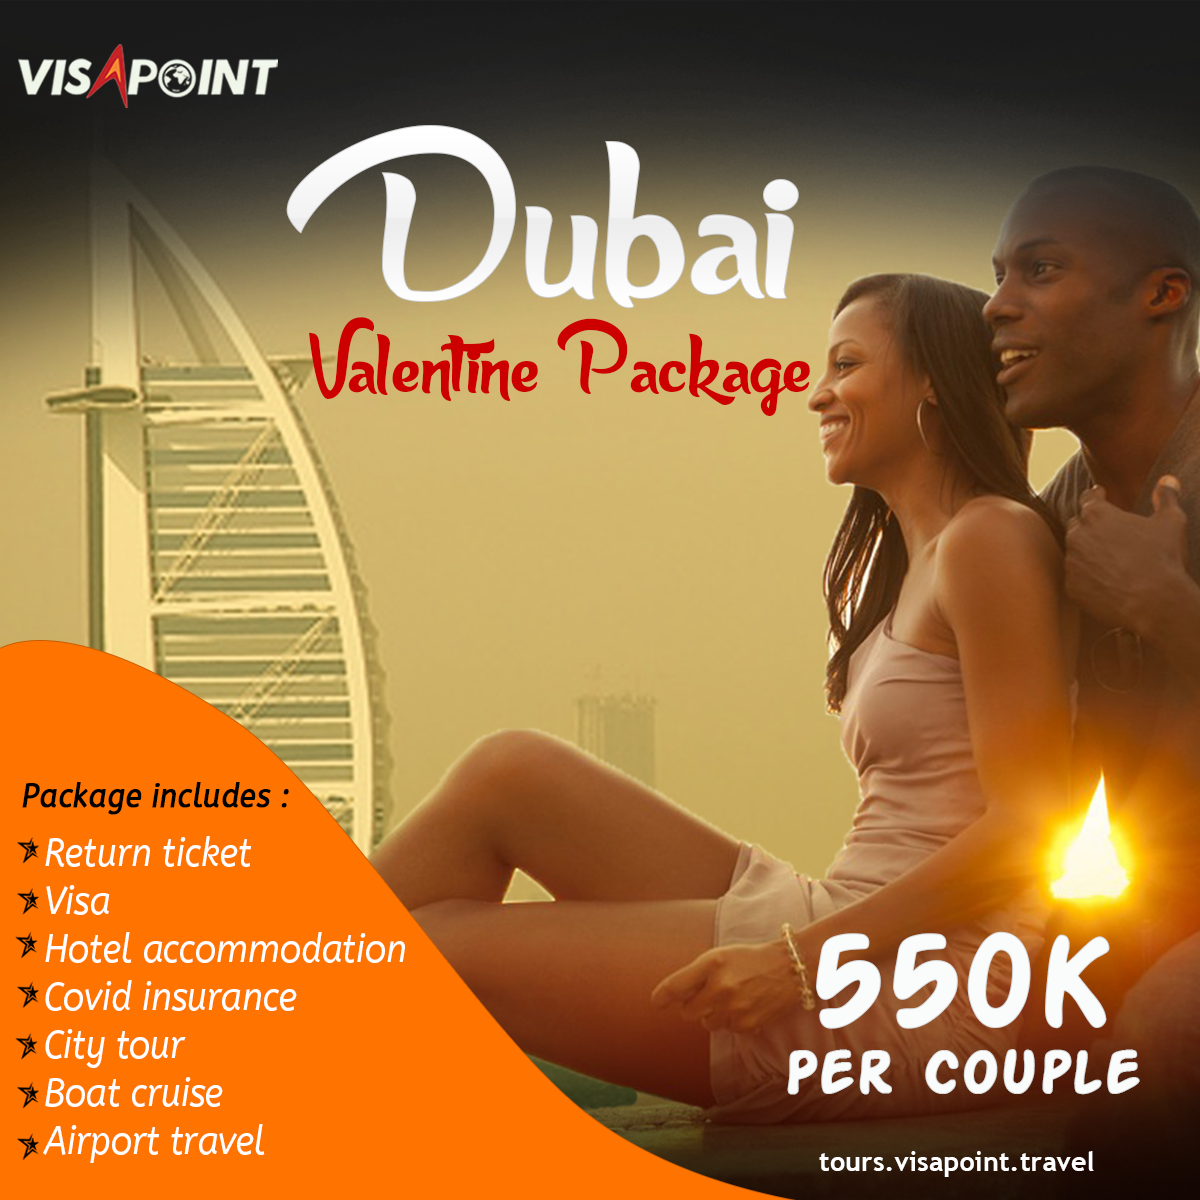 Dubai Valentine Package